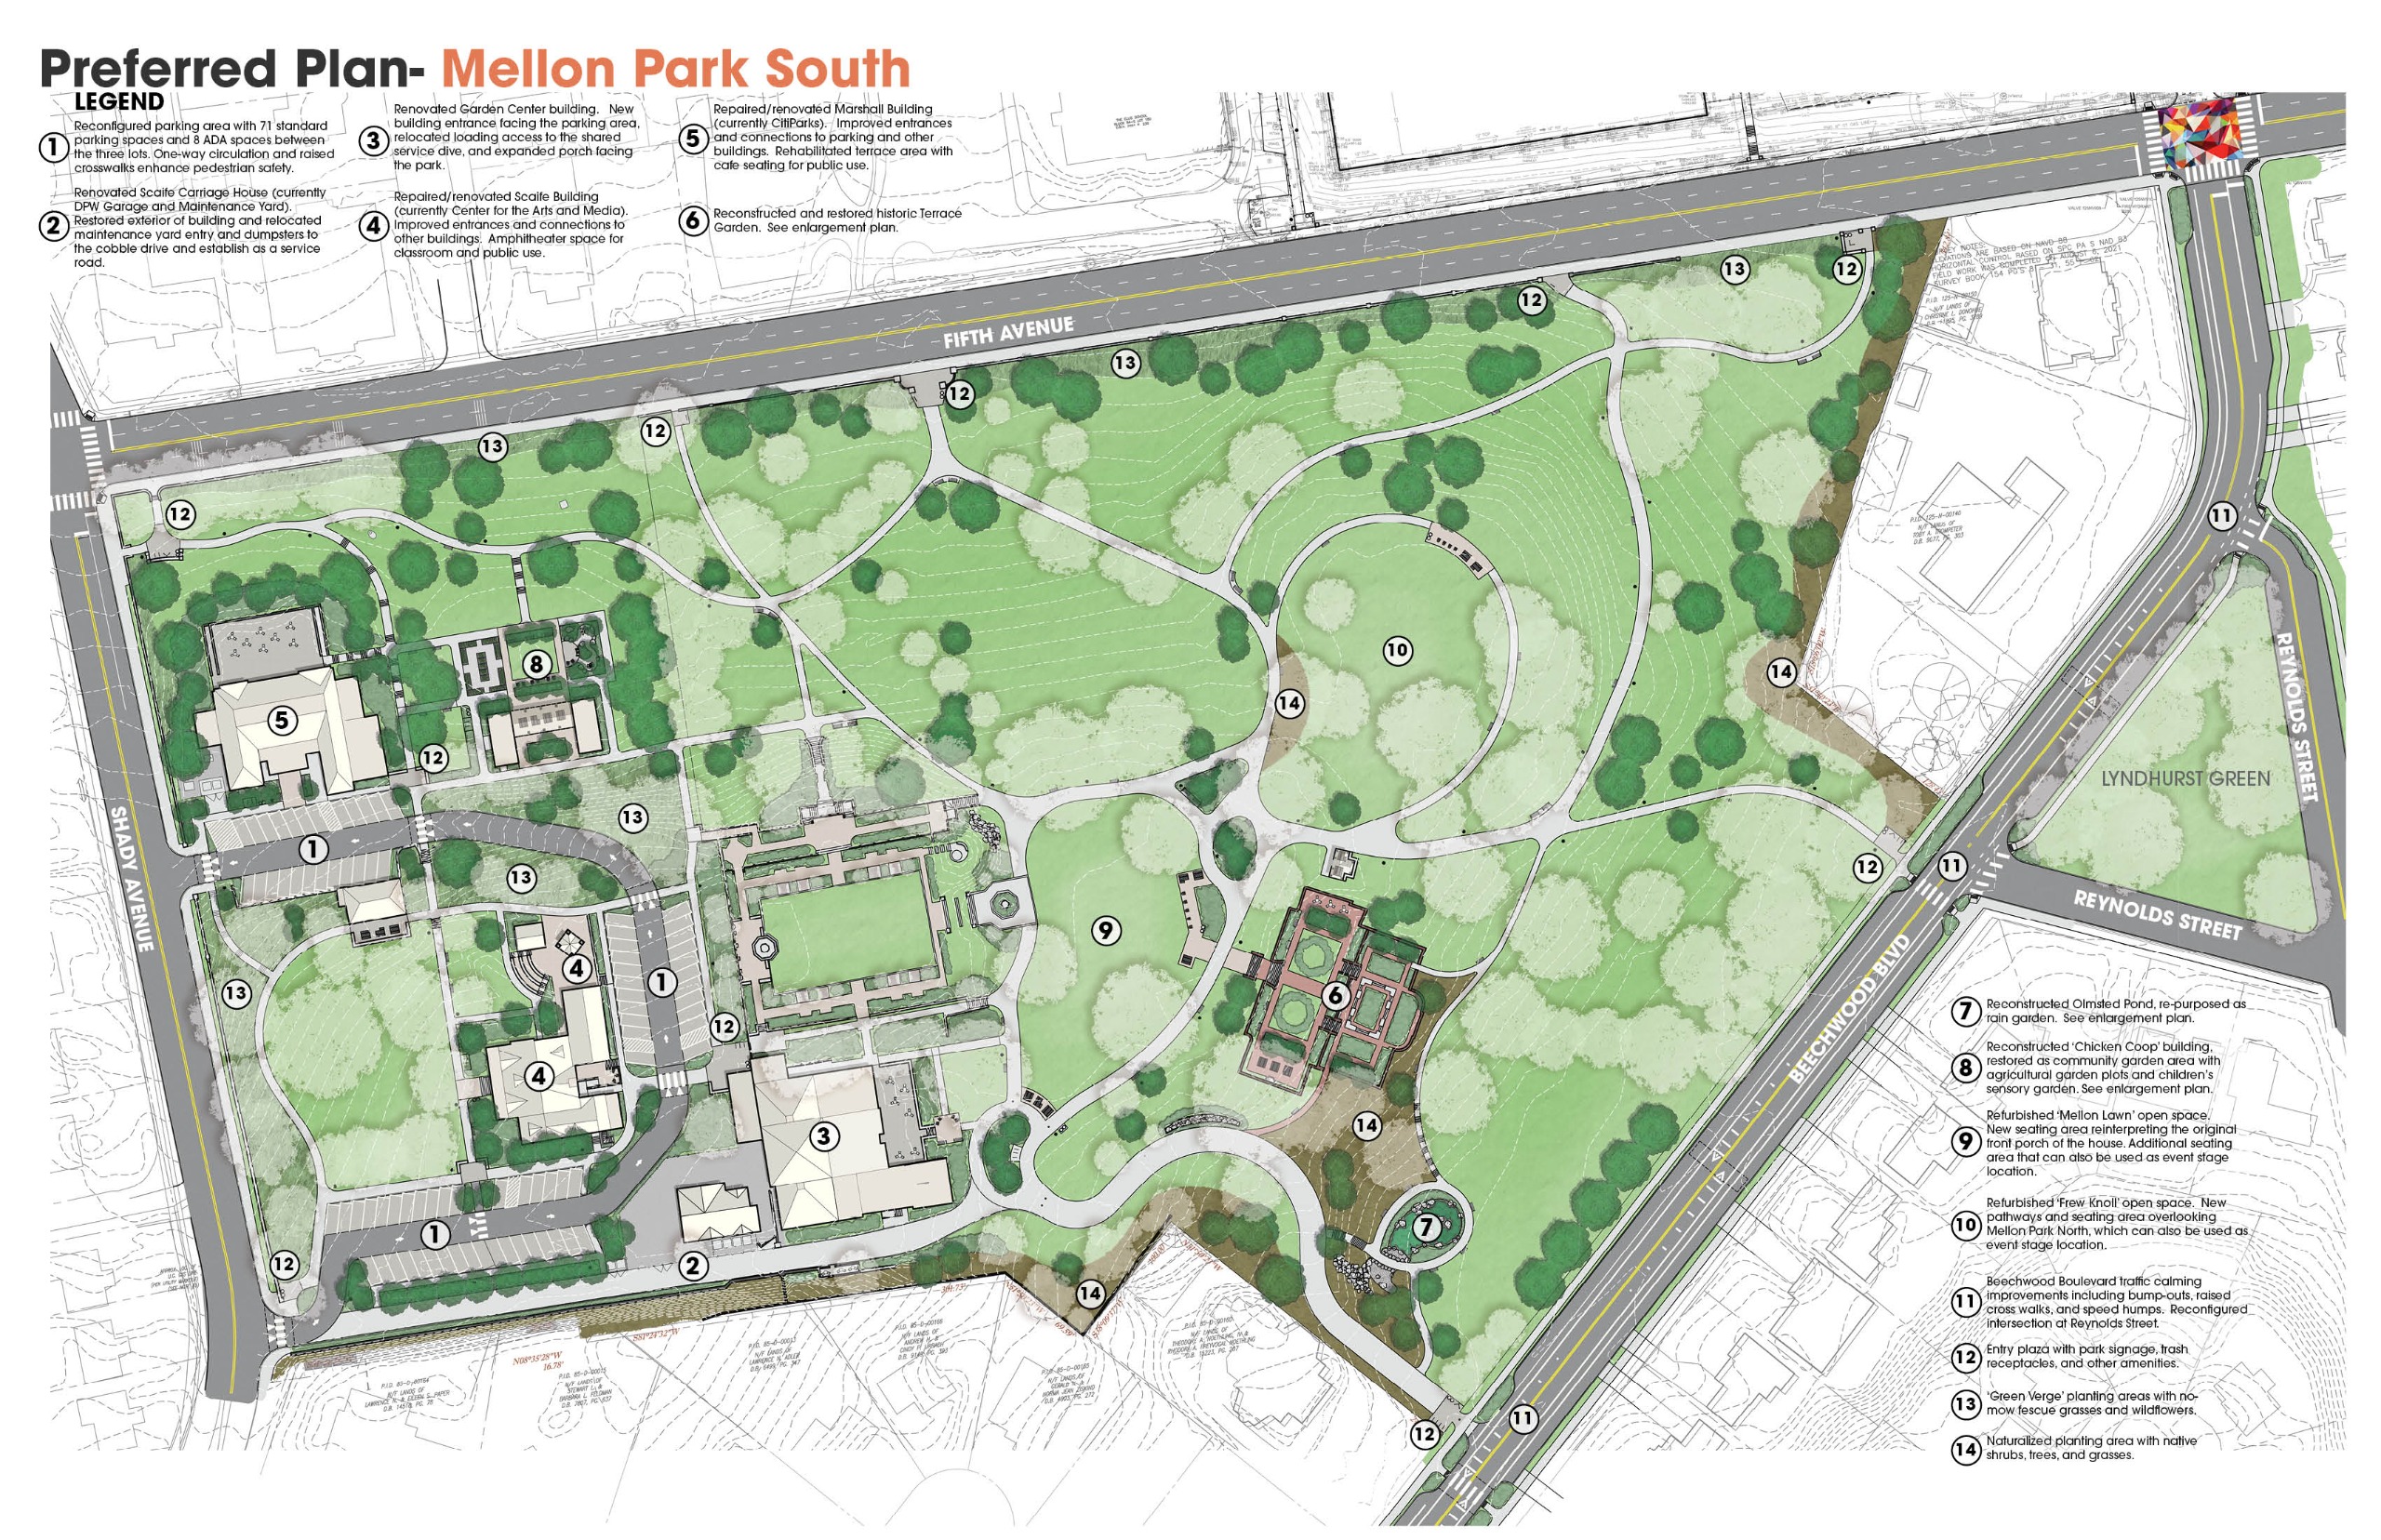 Mellon_Park_South_Preferred_Plan.jpg